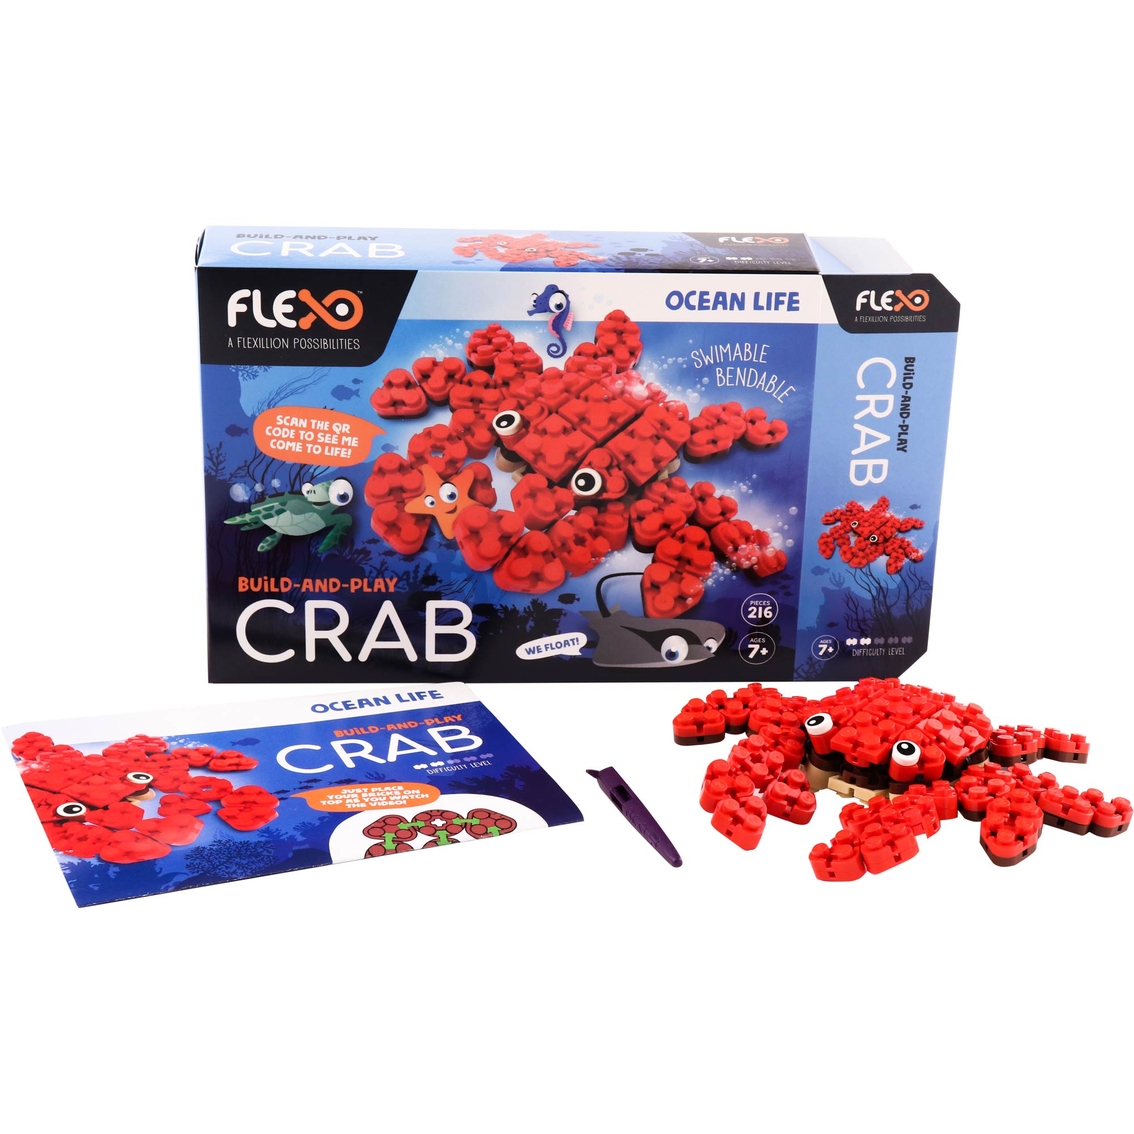 Flexo Ocean Life Range Building Bricks, Crab - Image 2 of 3